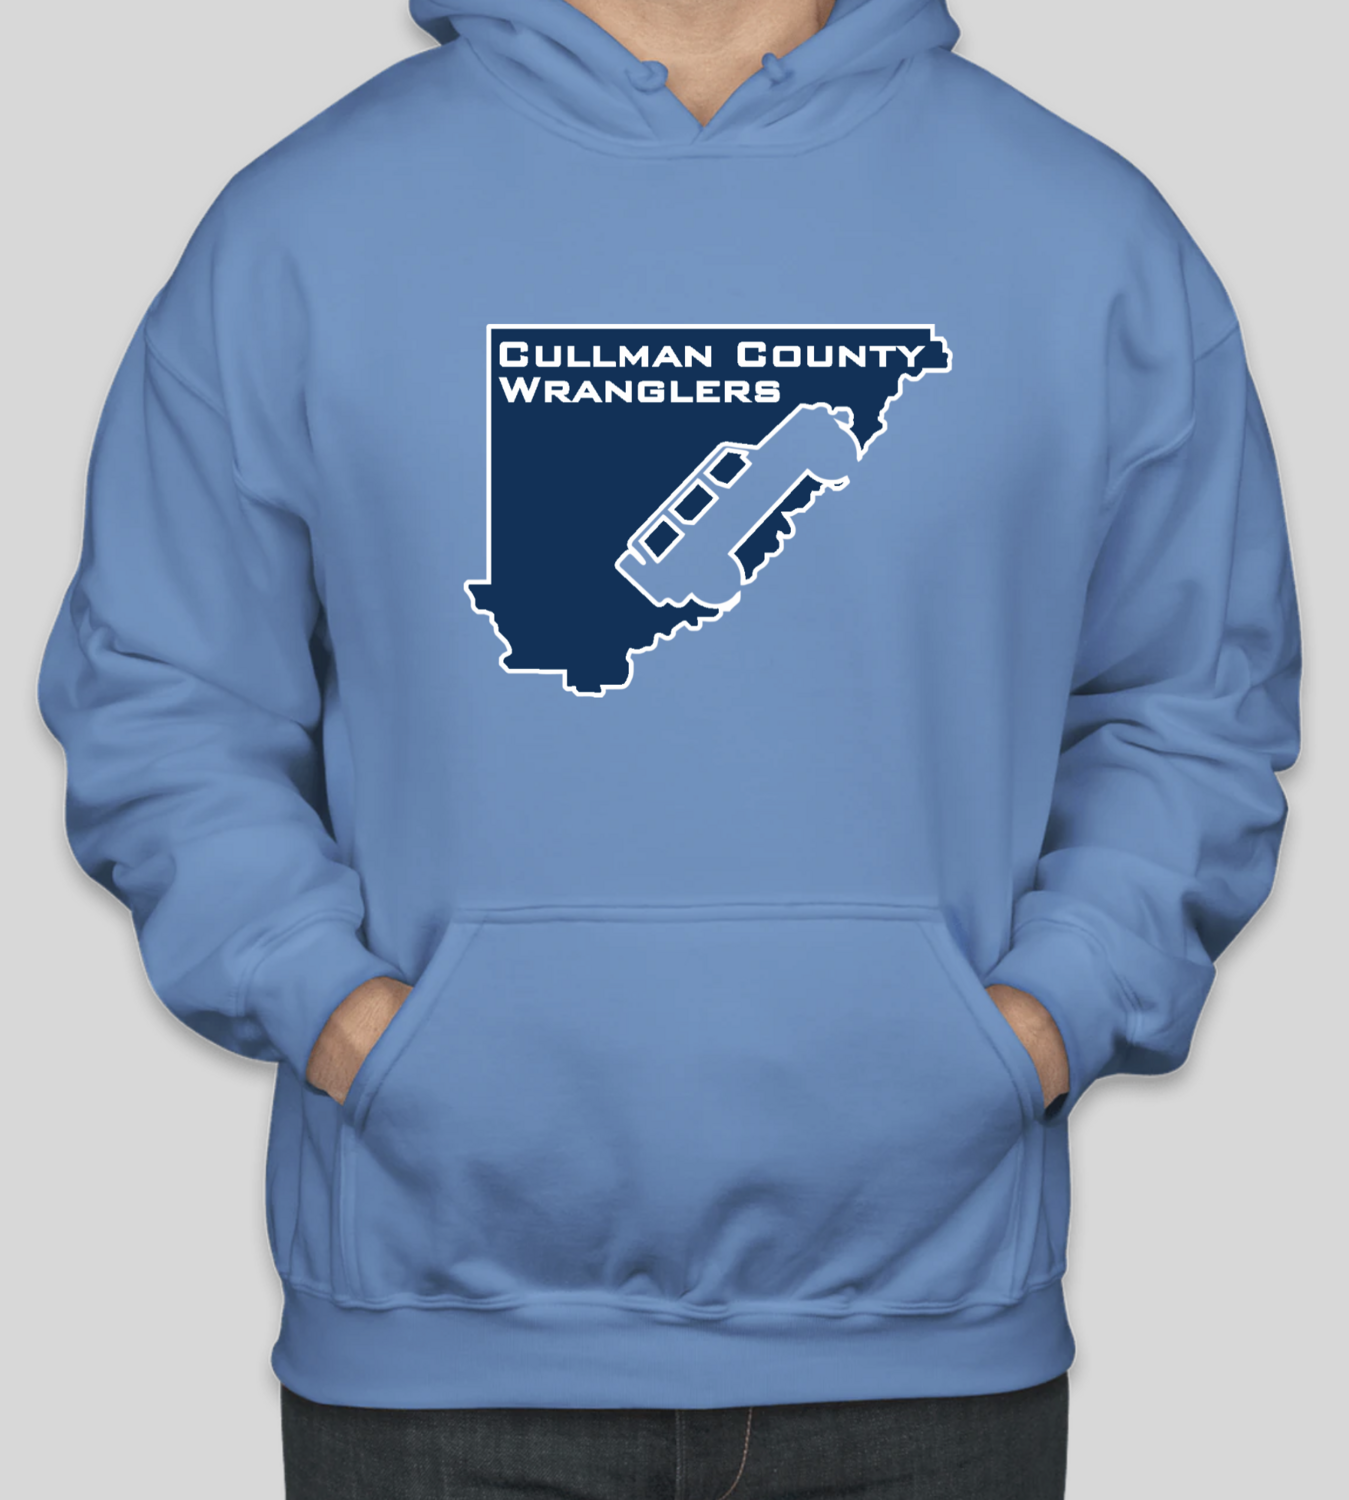 Cullman County Wranglers Hooded Sweatshirt - Carolina Blue